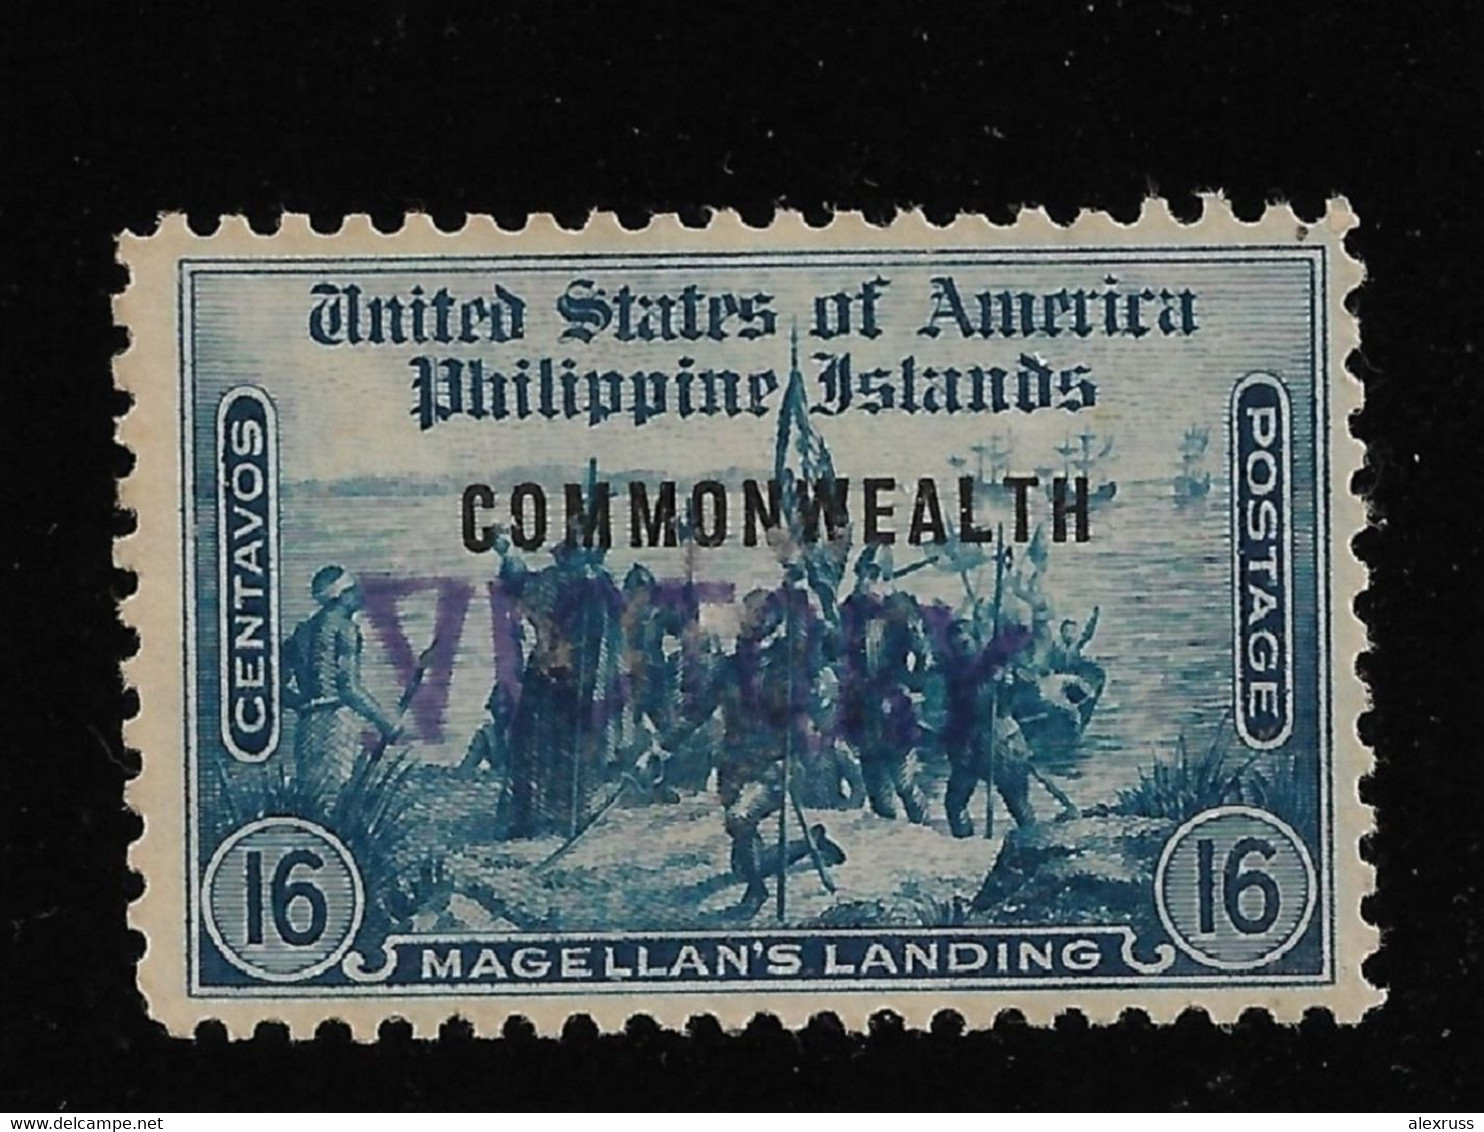 US Possessions, Philippines 1944, Overprinted Vio, "VICTORY", Scott # 479, Mint No GUM !! V$1500 !!! - Philippines